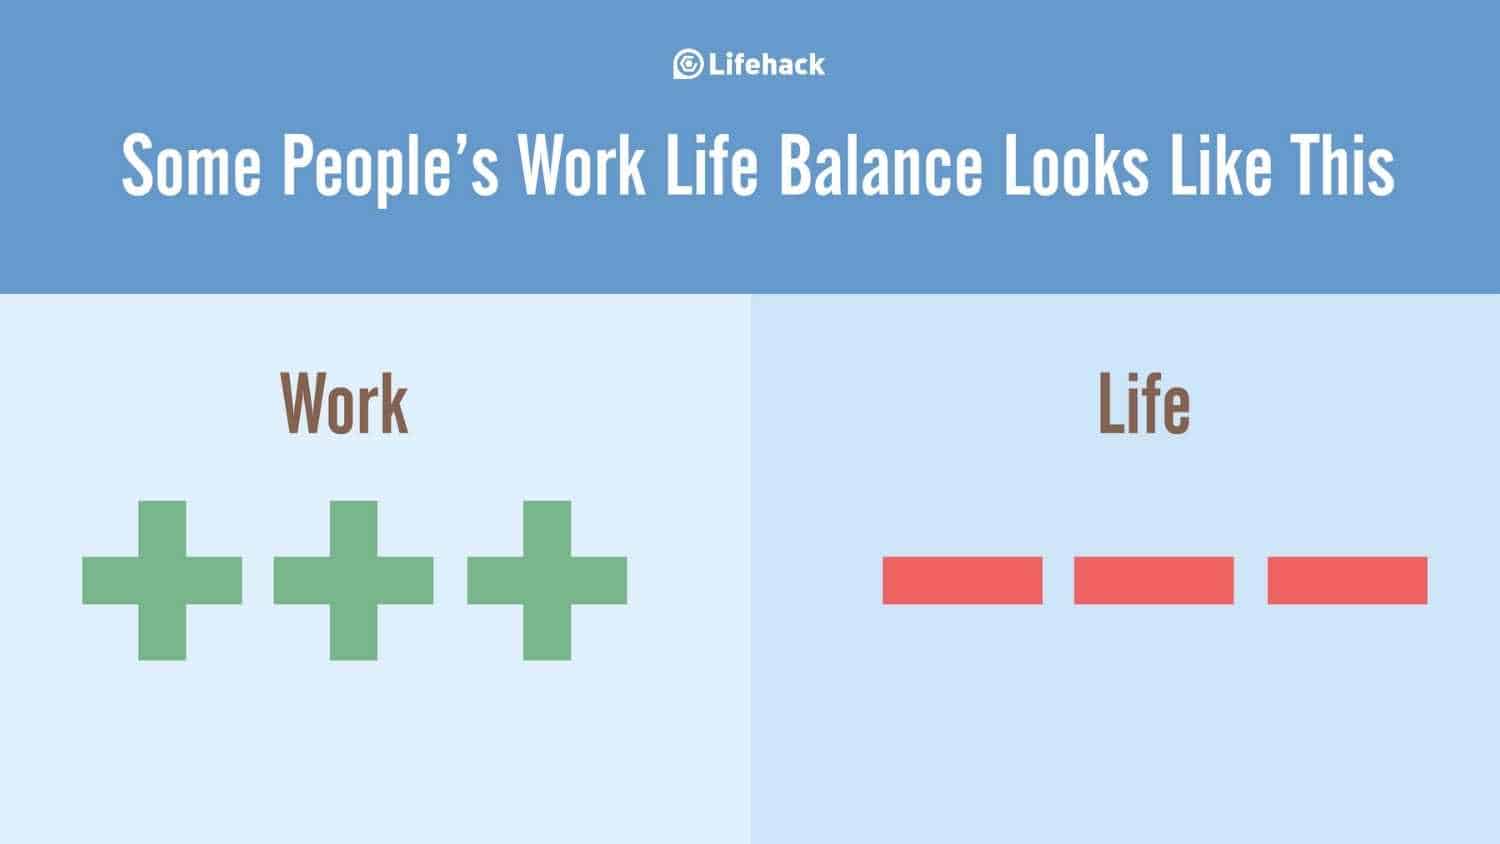 How to Create a Good Work-Life Balance Realistically